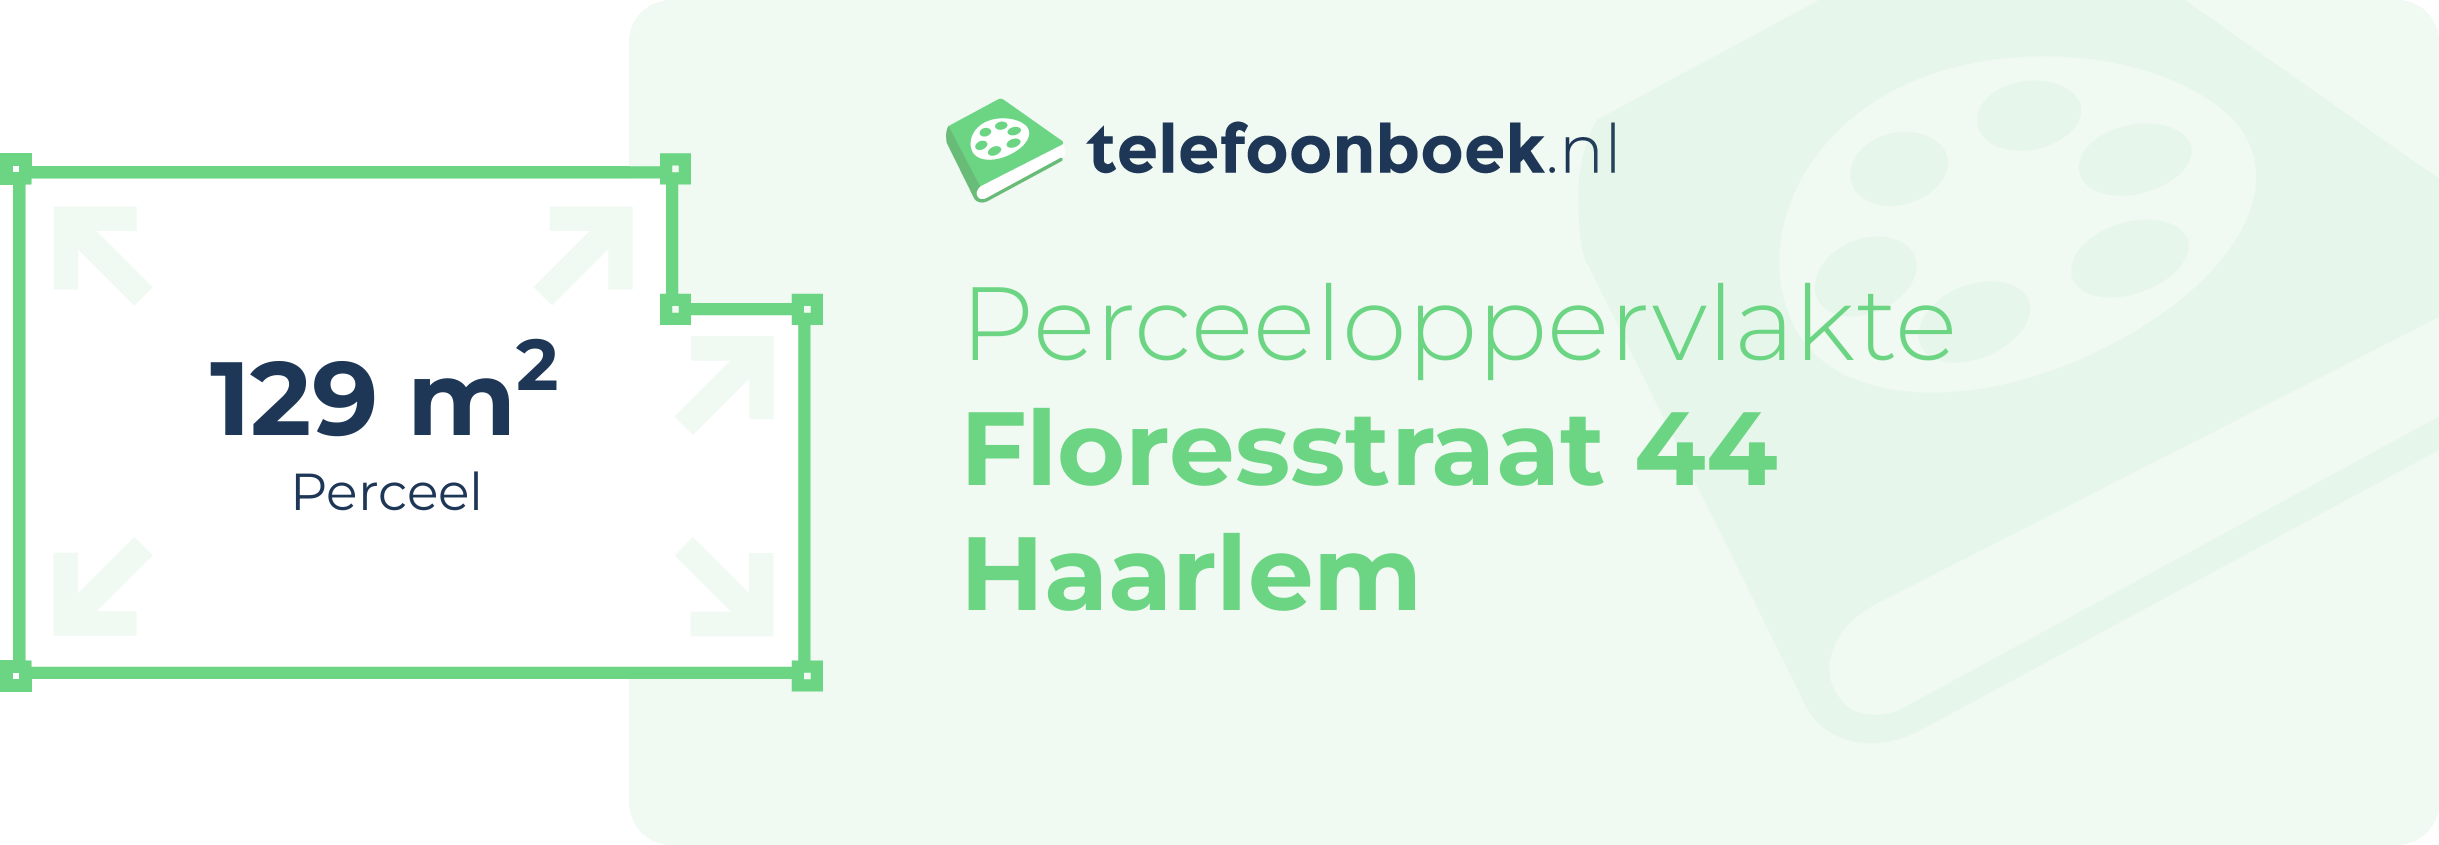 Perceeloppervlakte Floresstraat 44 Haarlem